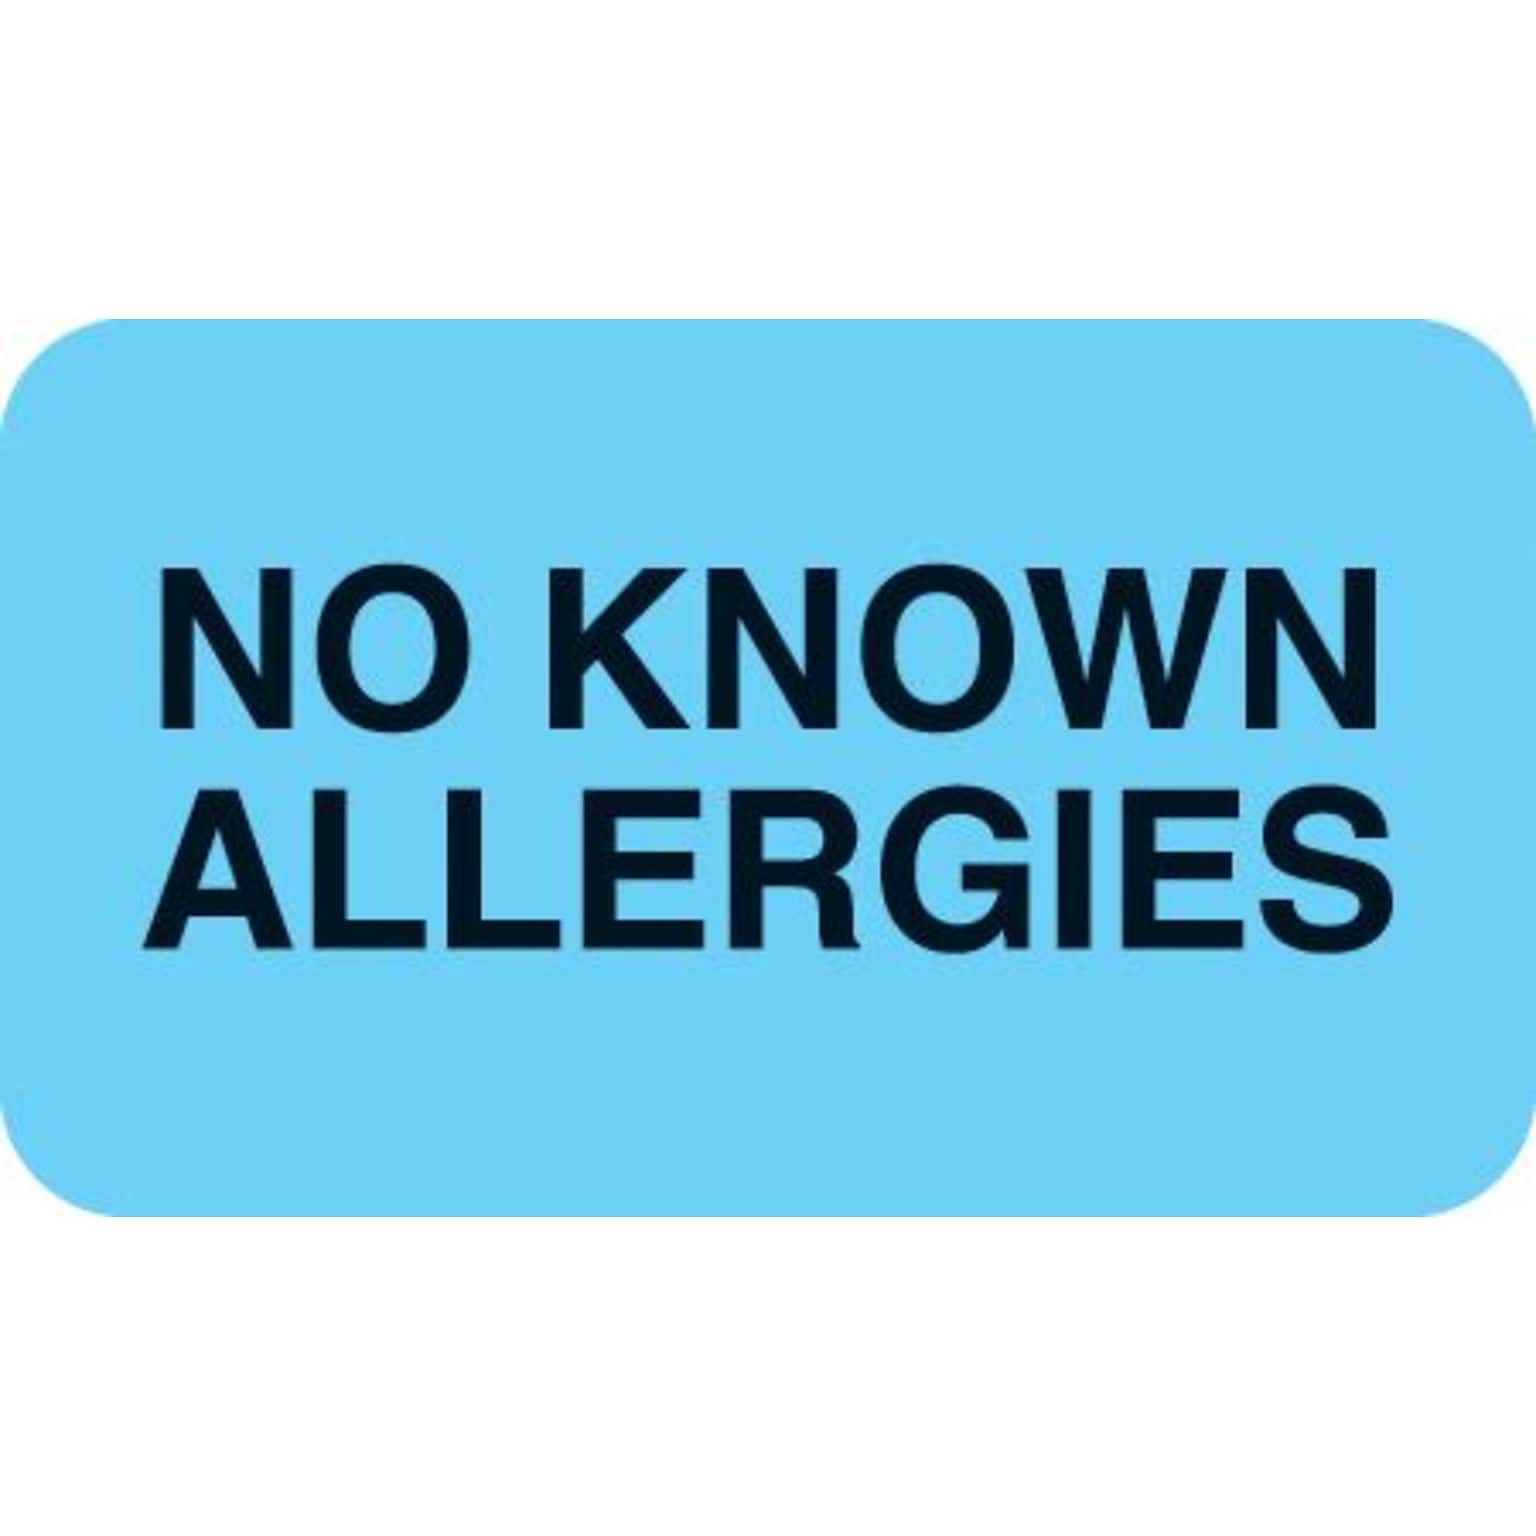 Medical Arts Press® Allergy Warning Medical Labels, No Known Allergies, Light Blue, 7/8x1-1/2, 500 Labels